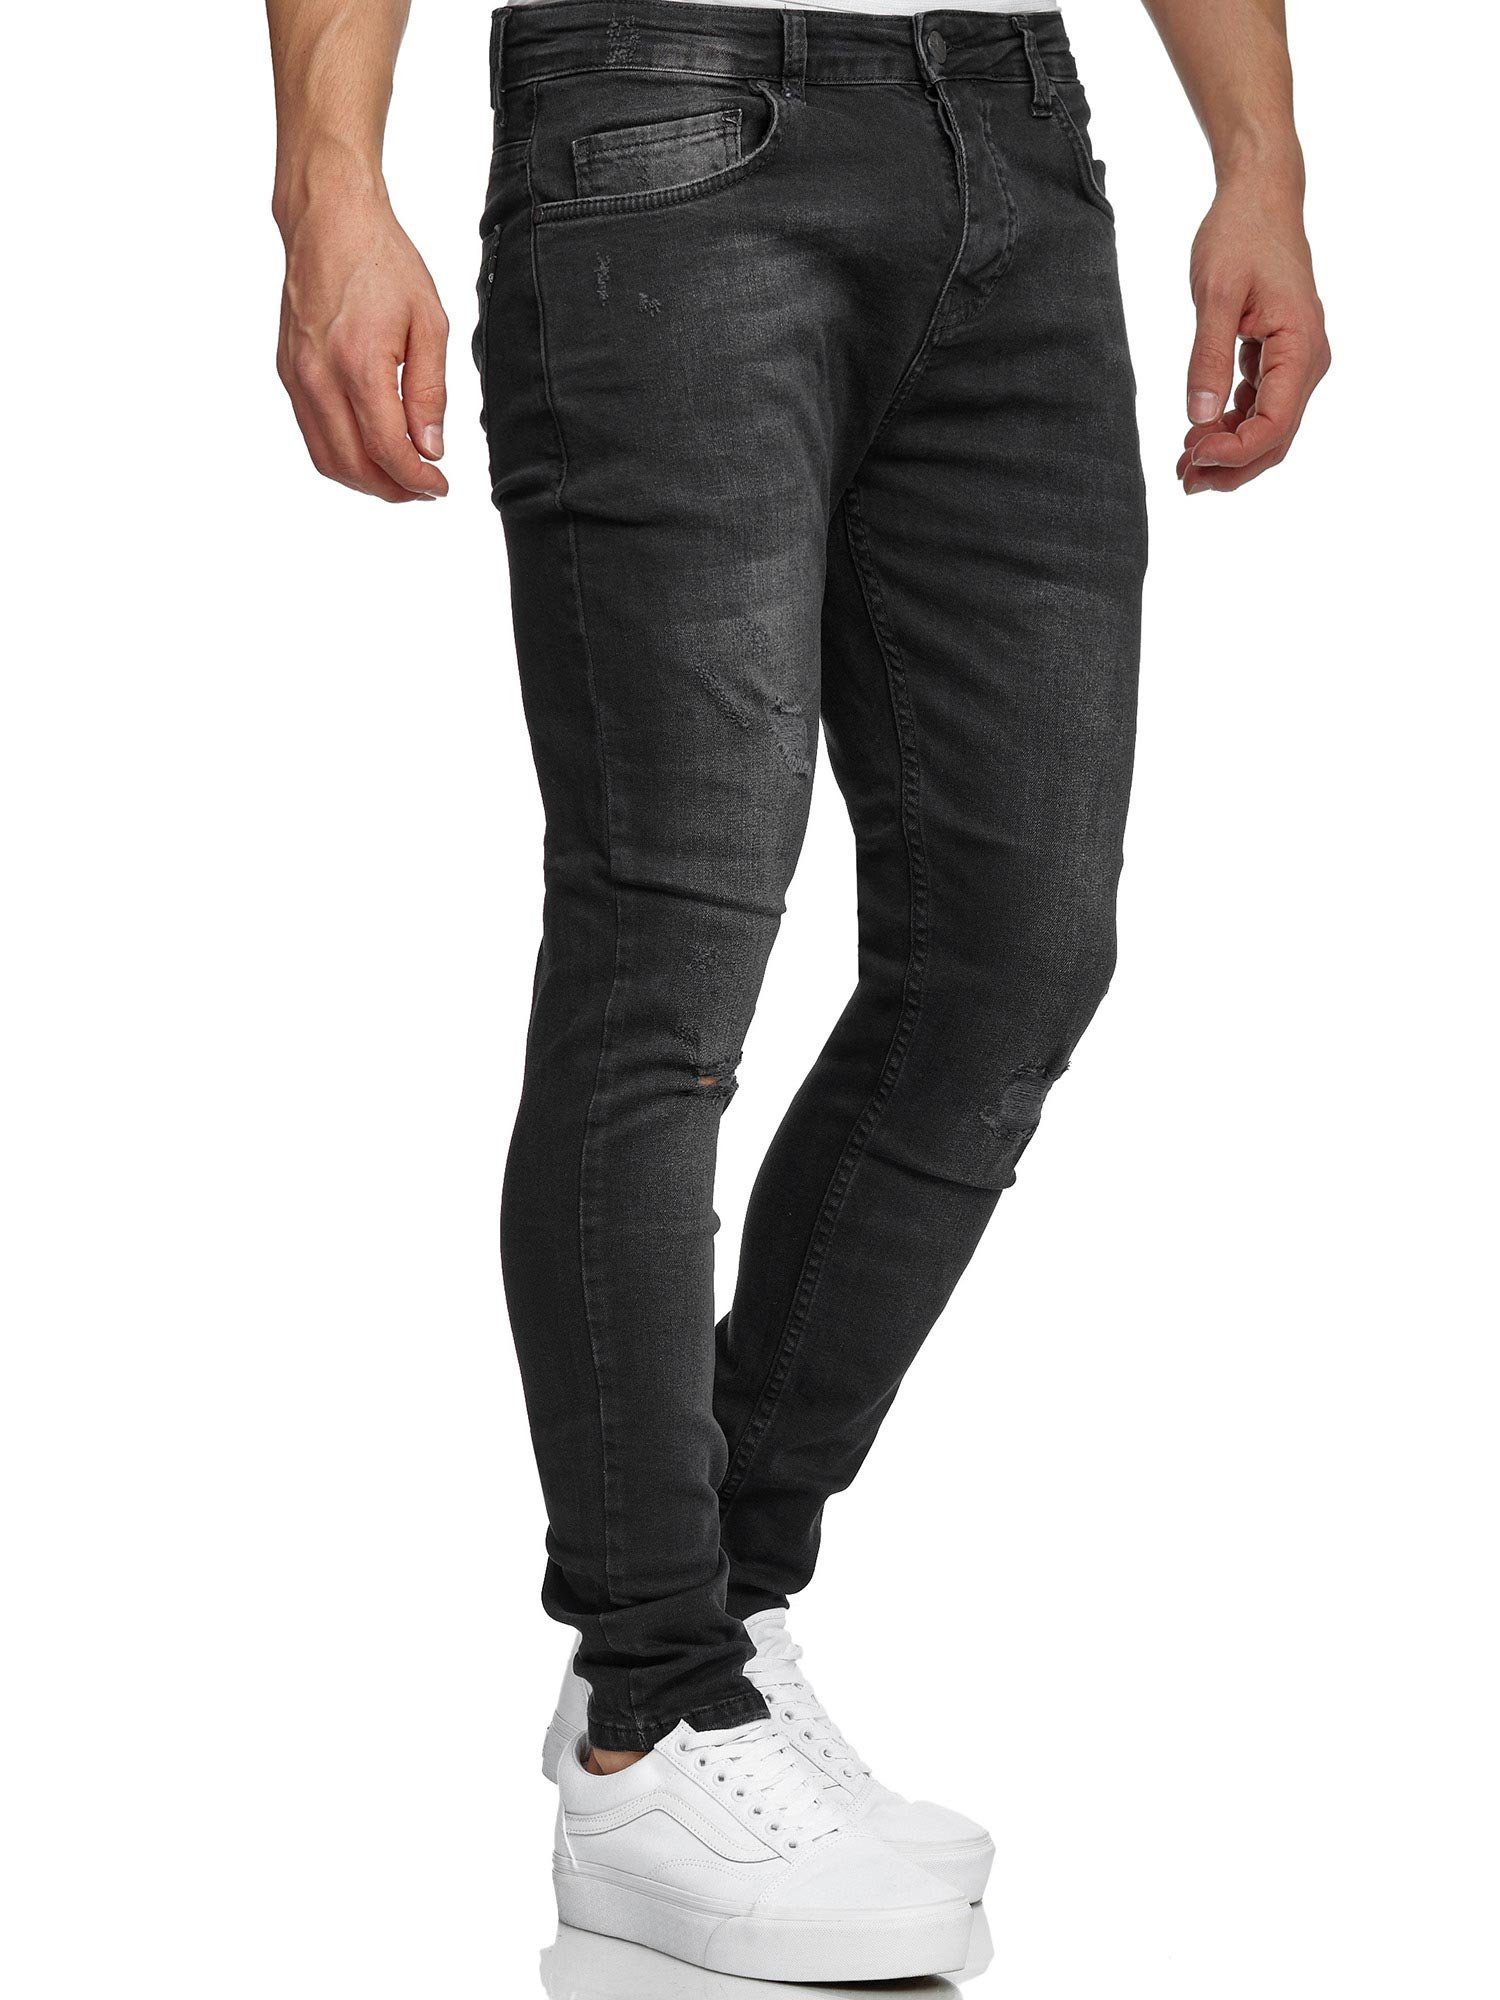 Tazzio Destroyed-Look schwarz 17514 im Skinny-fit-Jeans